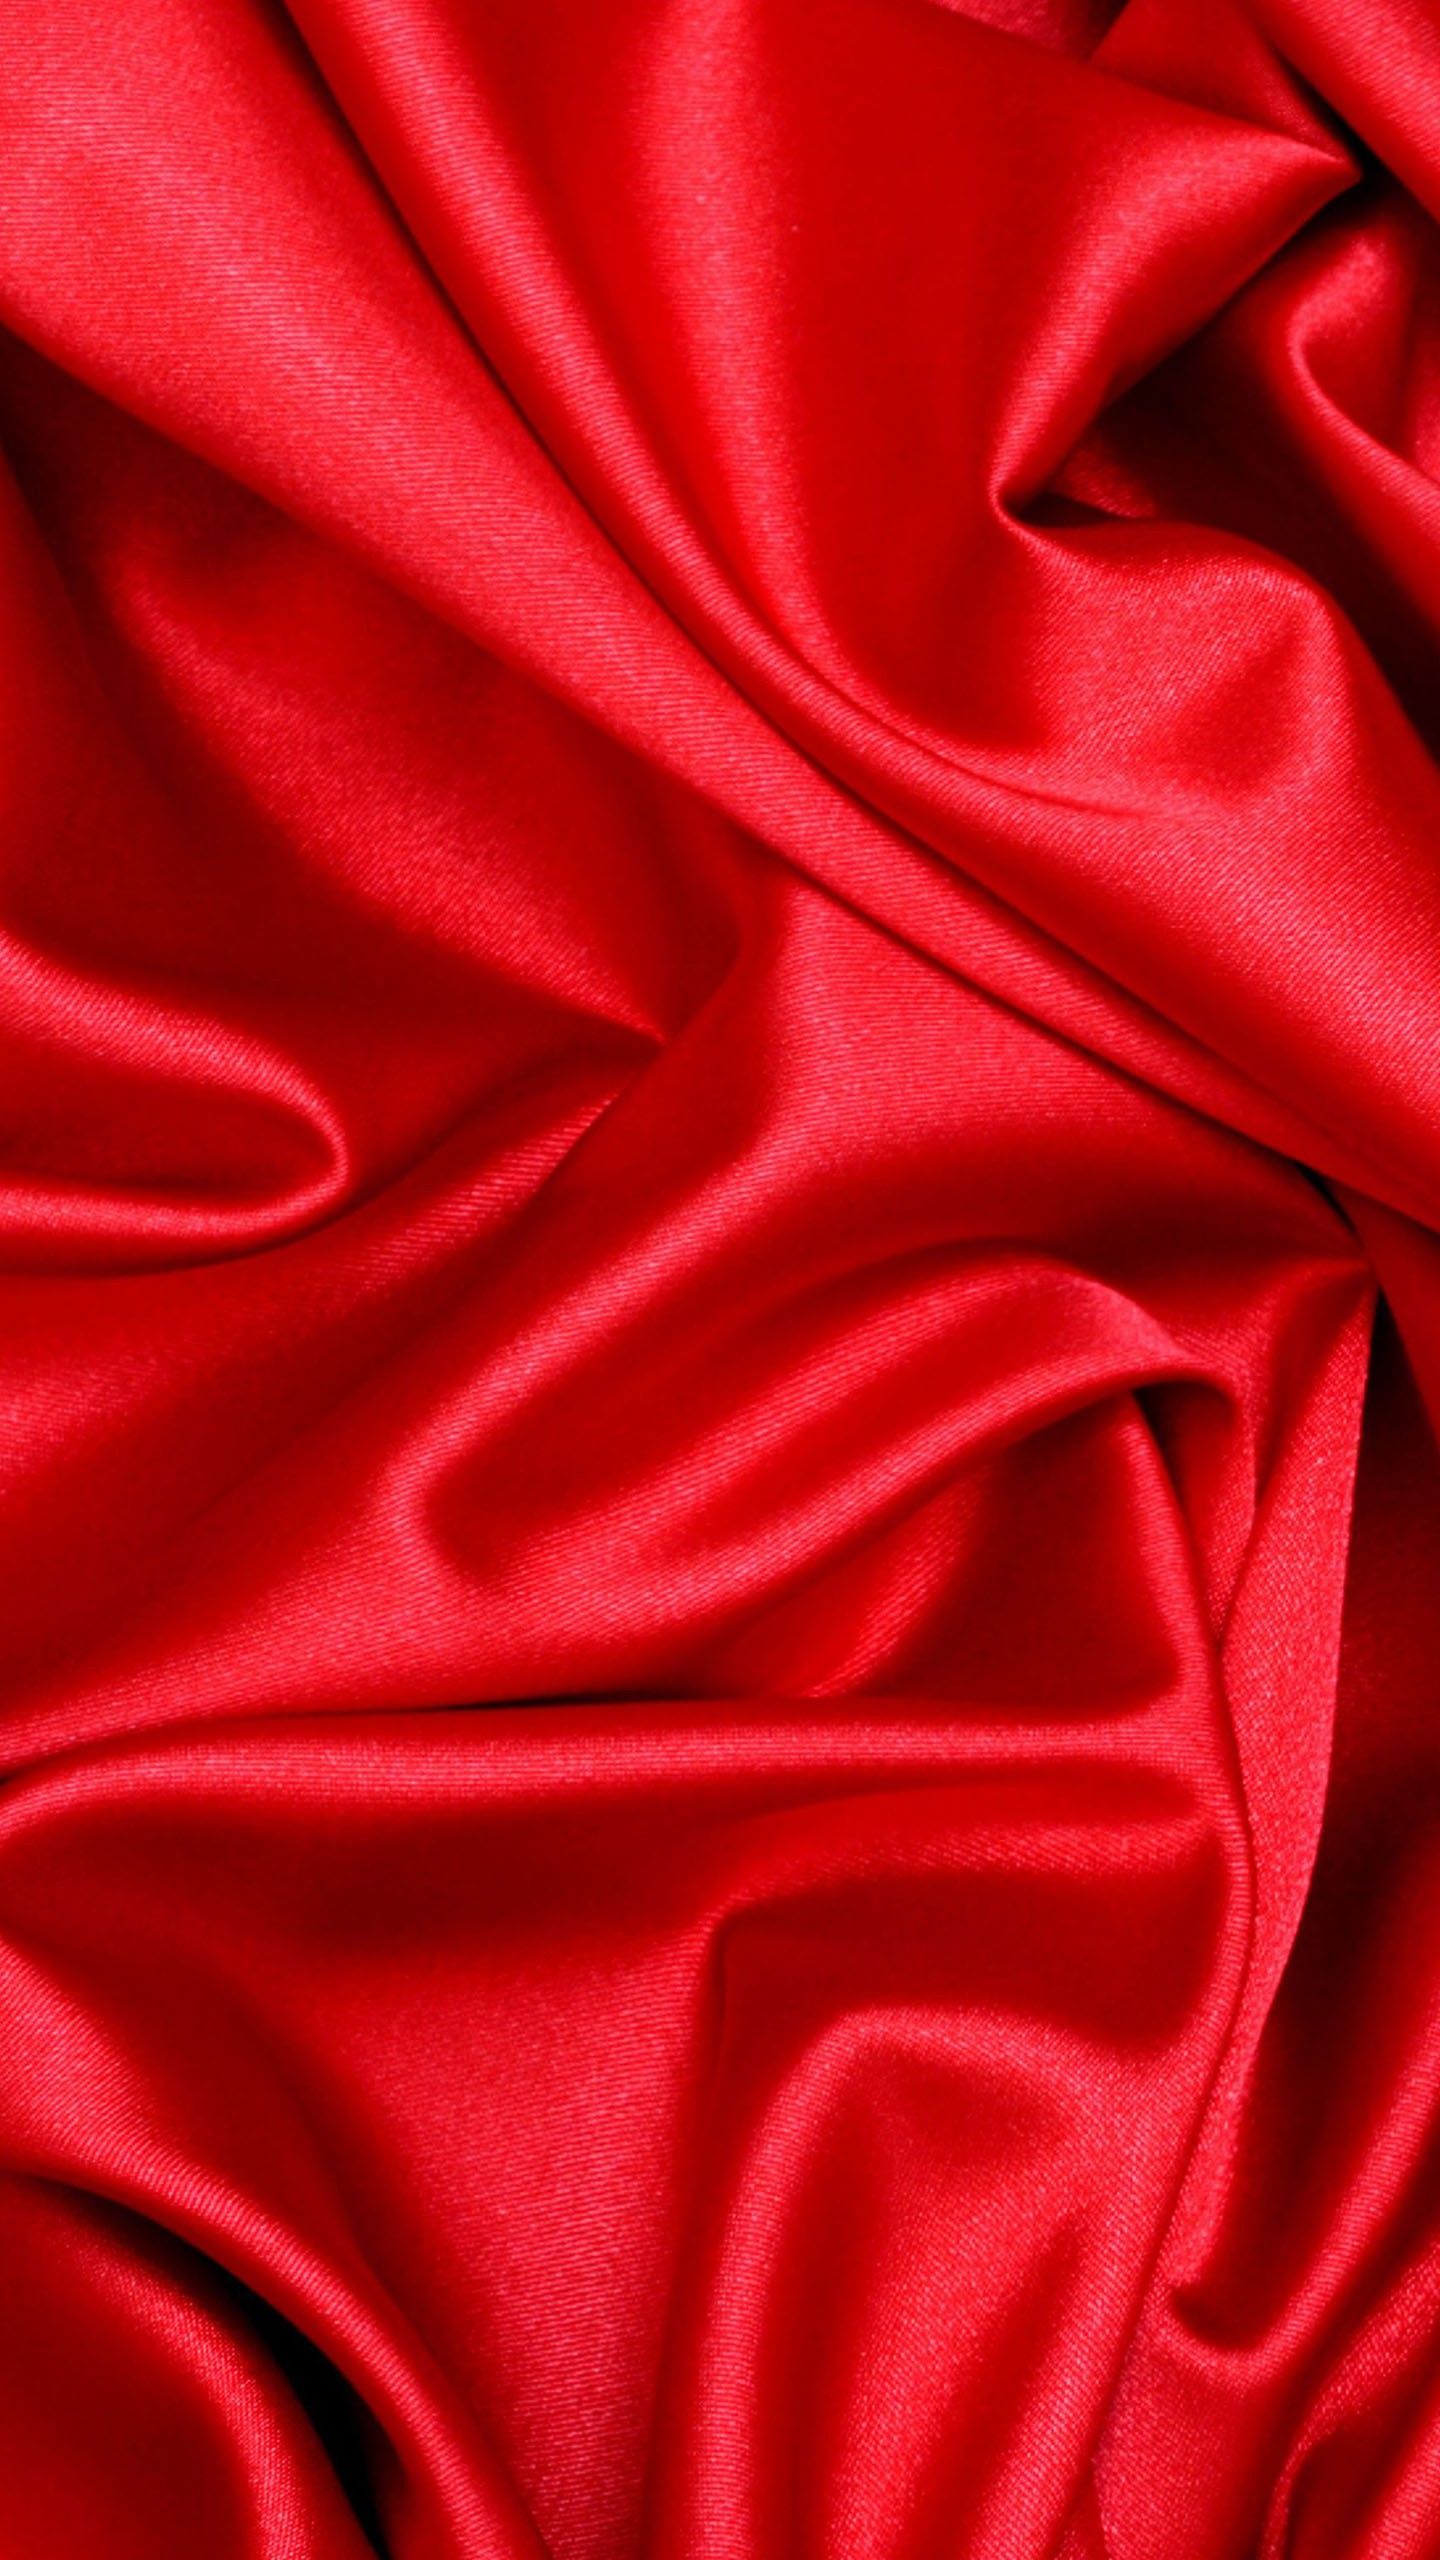 Dark Red Wavy Silk Texture Fabric 4K 5K HD Silk Wallpaper